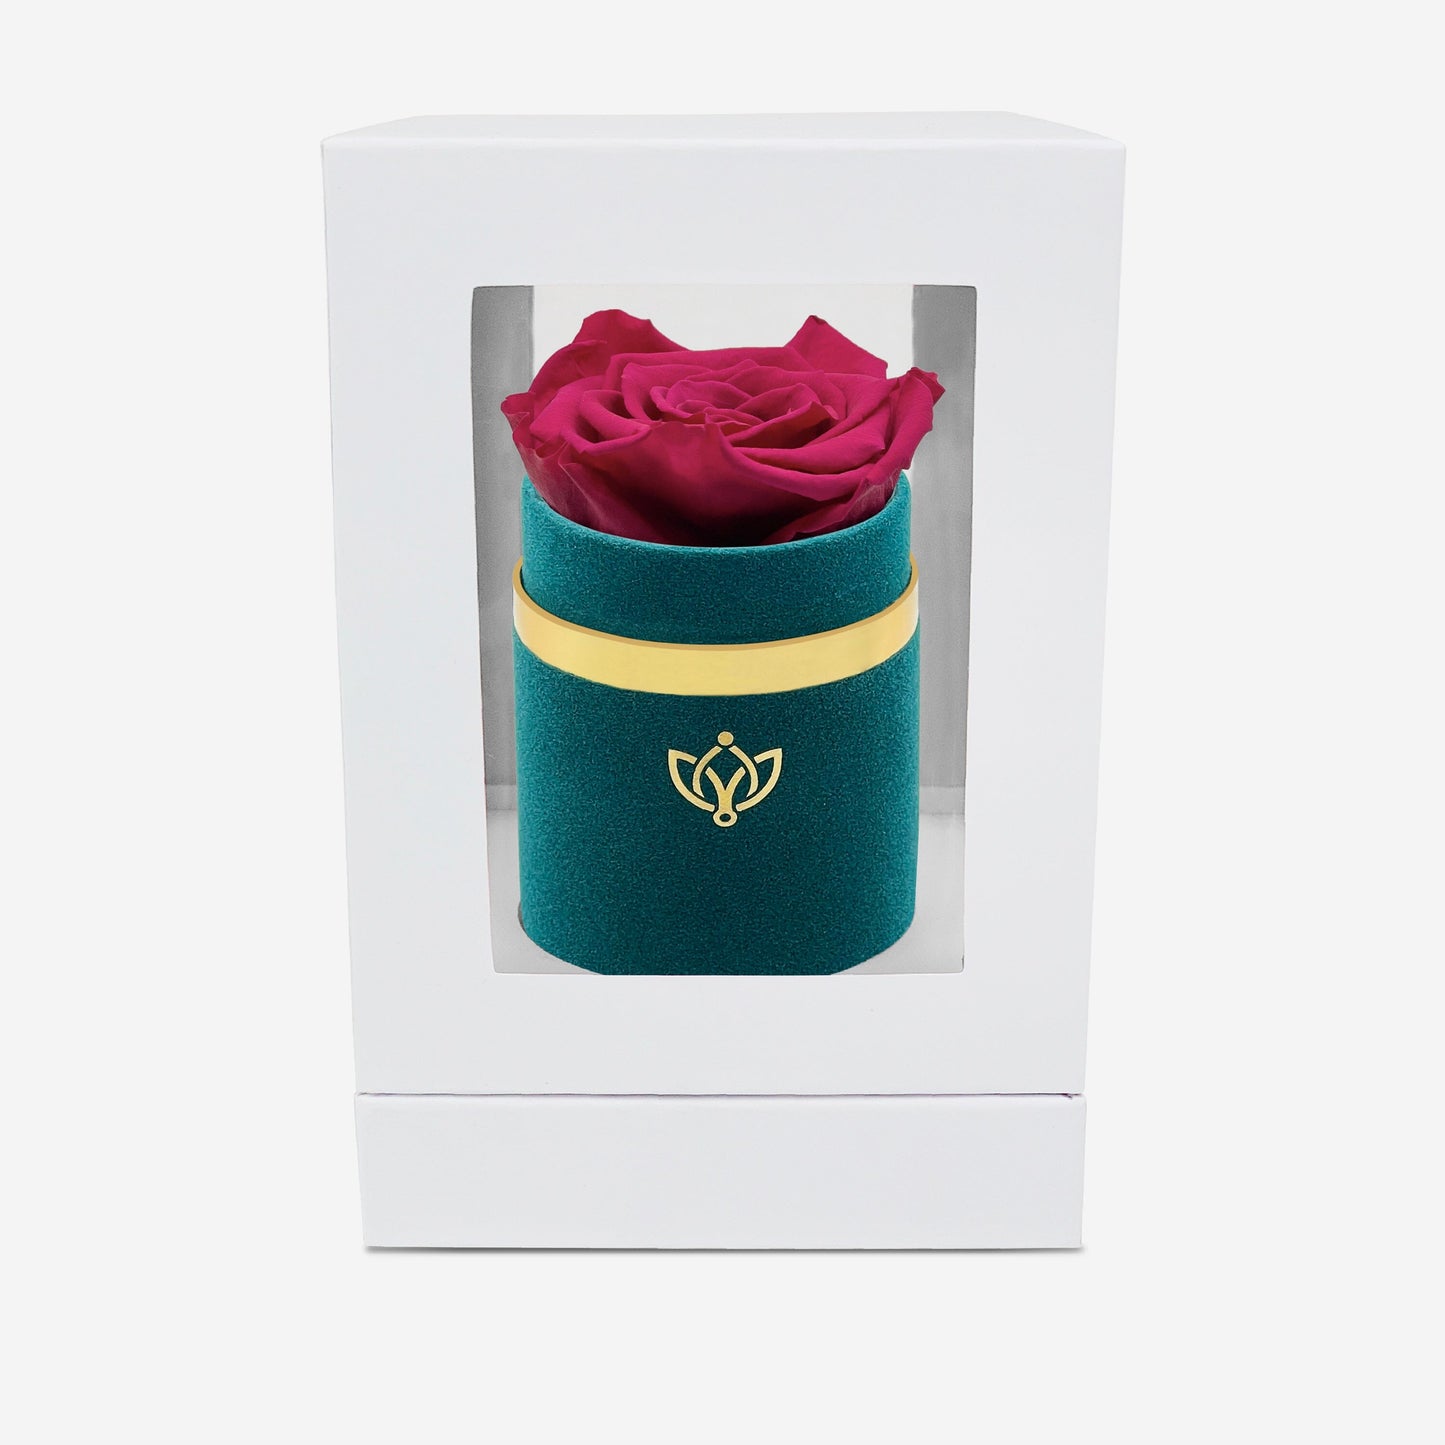 Single Dark Green Suede Box | Magenta Rose - The Million Roses